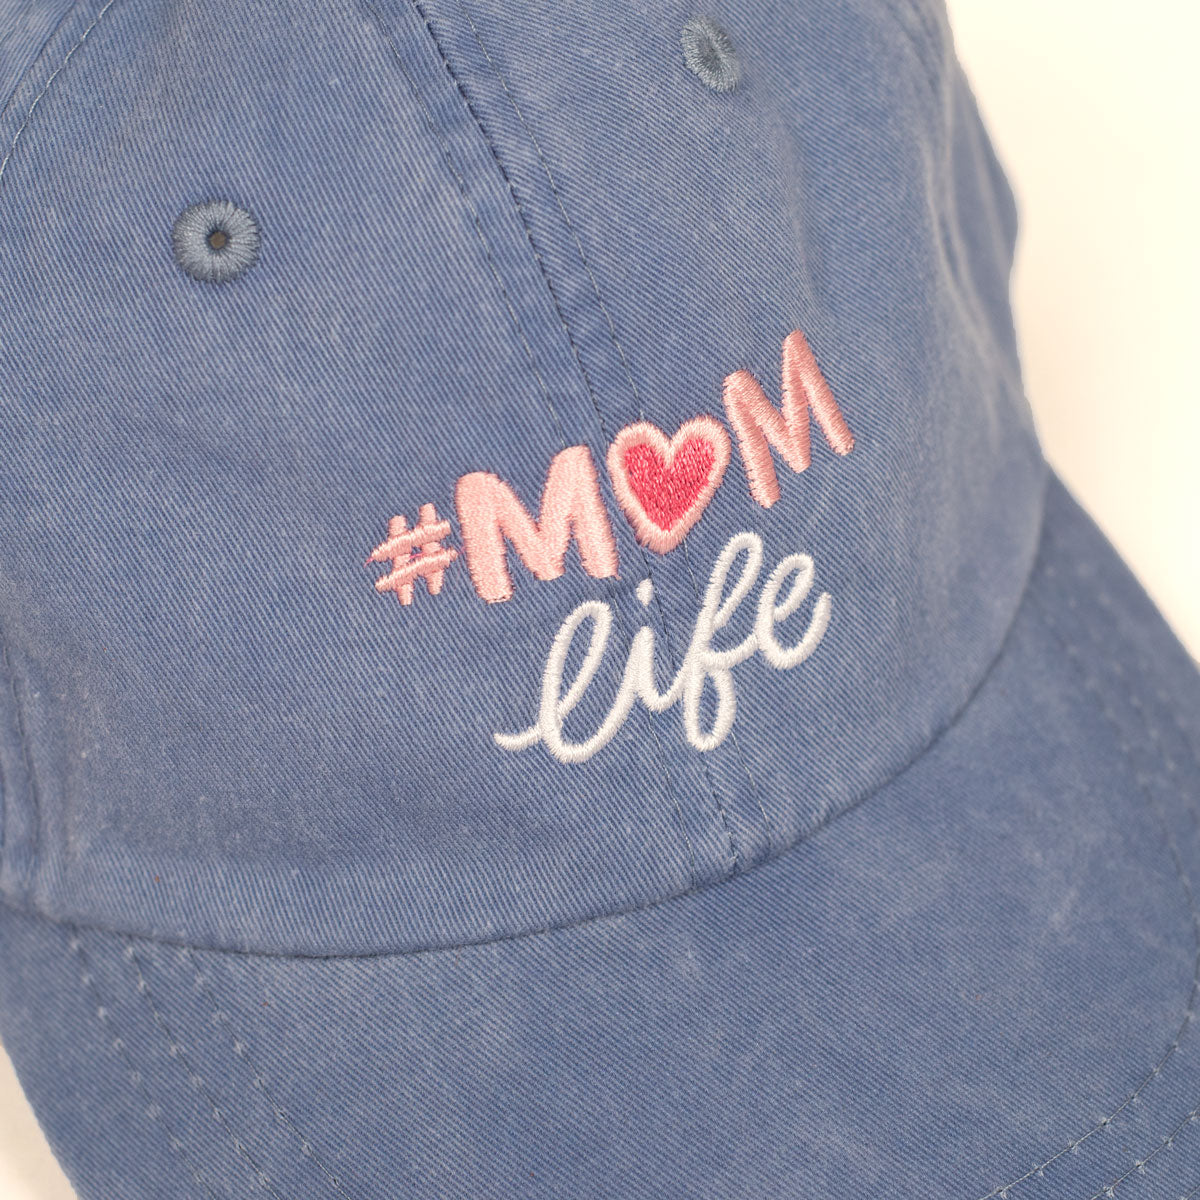 #MomLife Hat